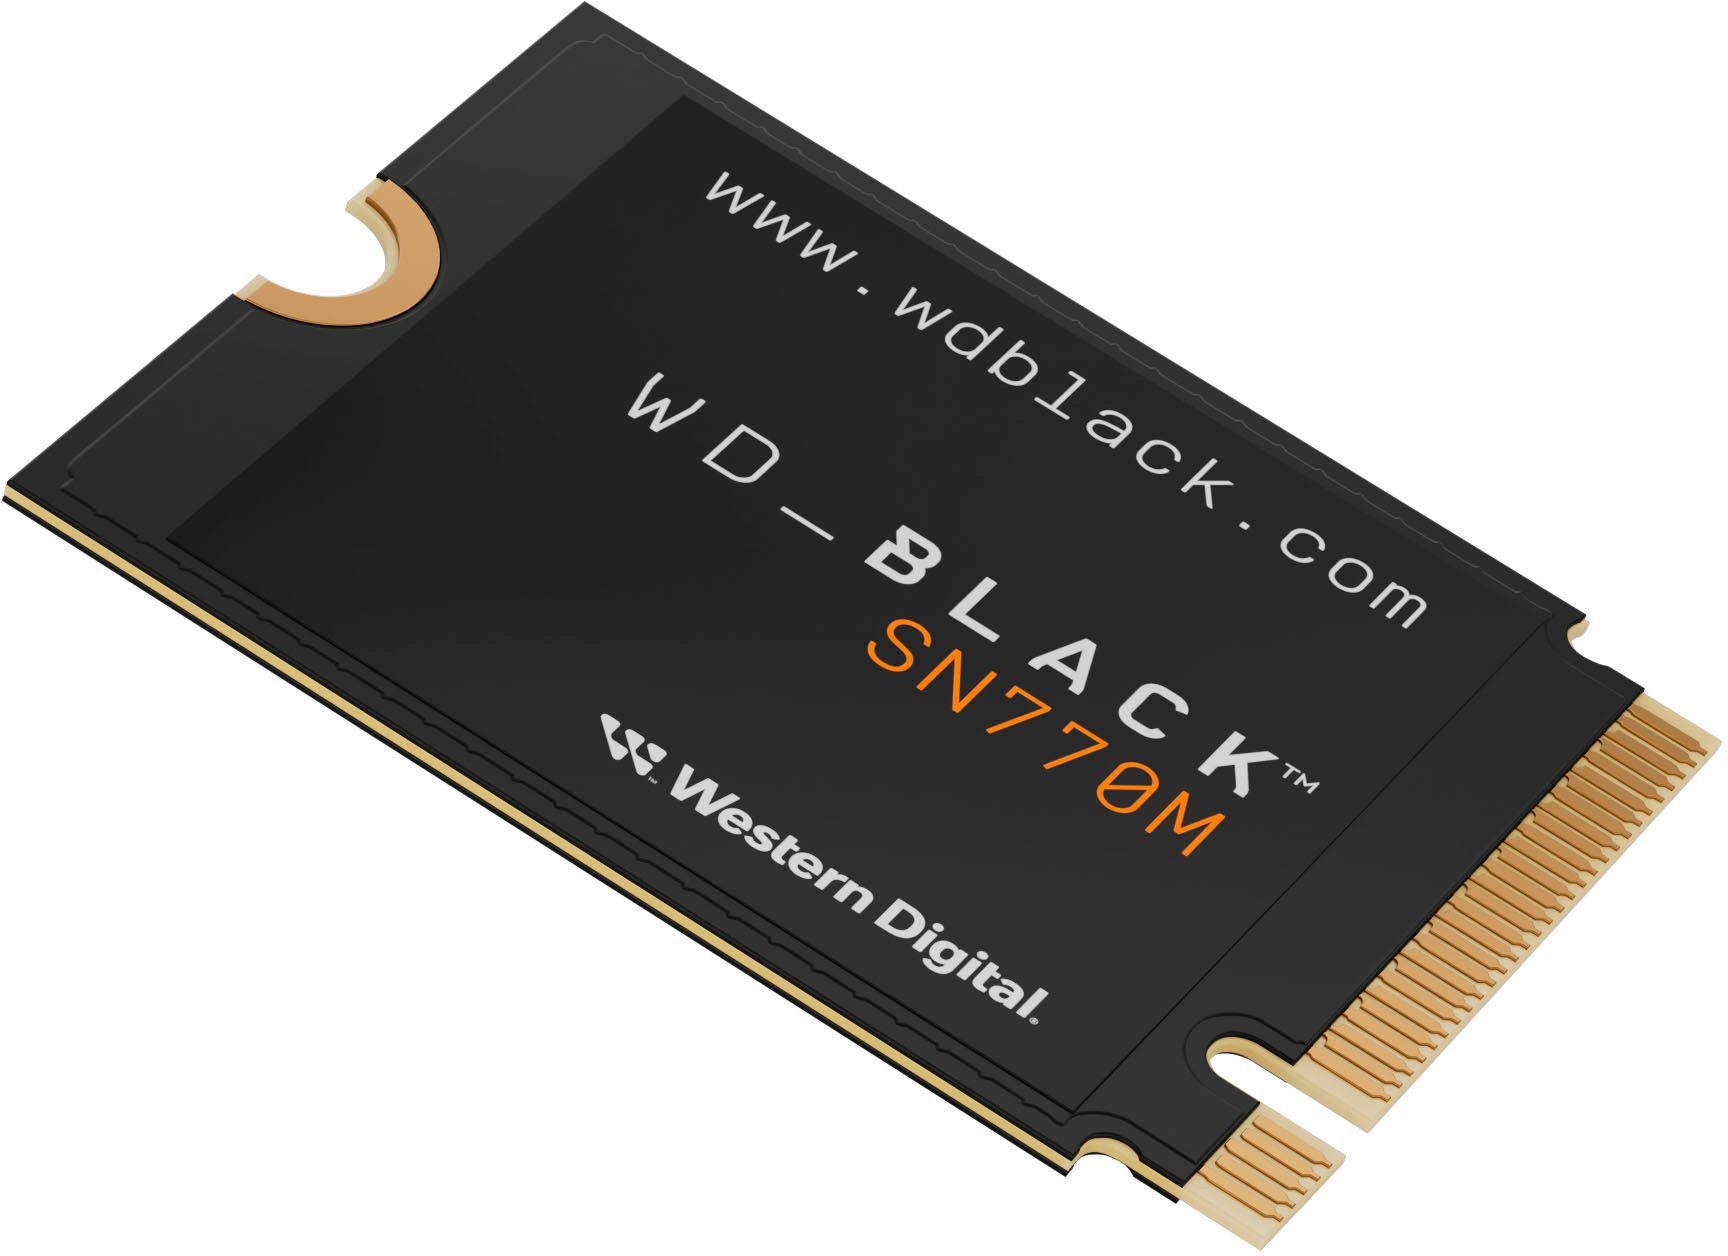 WD BLACK SN770M 2TB Internal SSD PCIe Gen 4 x4 M.2 2230 for ROG Ally and  Steam Deck WDBDNH0020BBK-WRSN - Best Buy